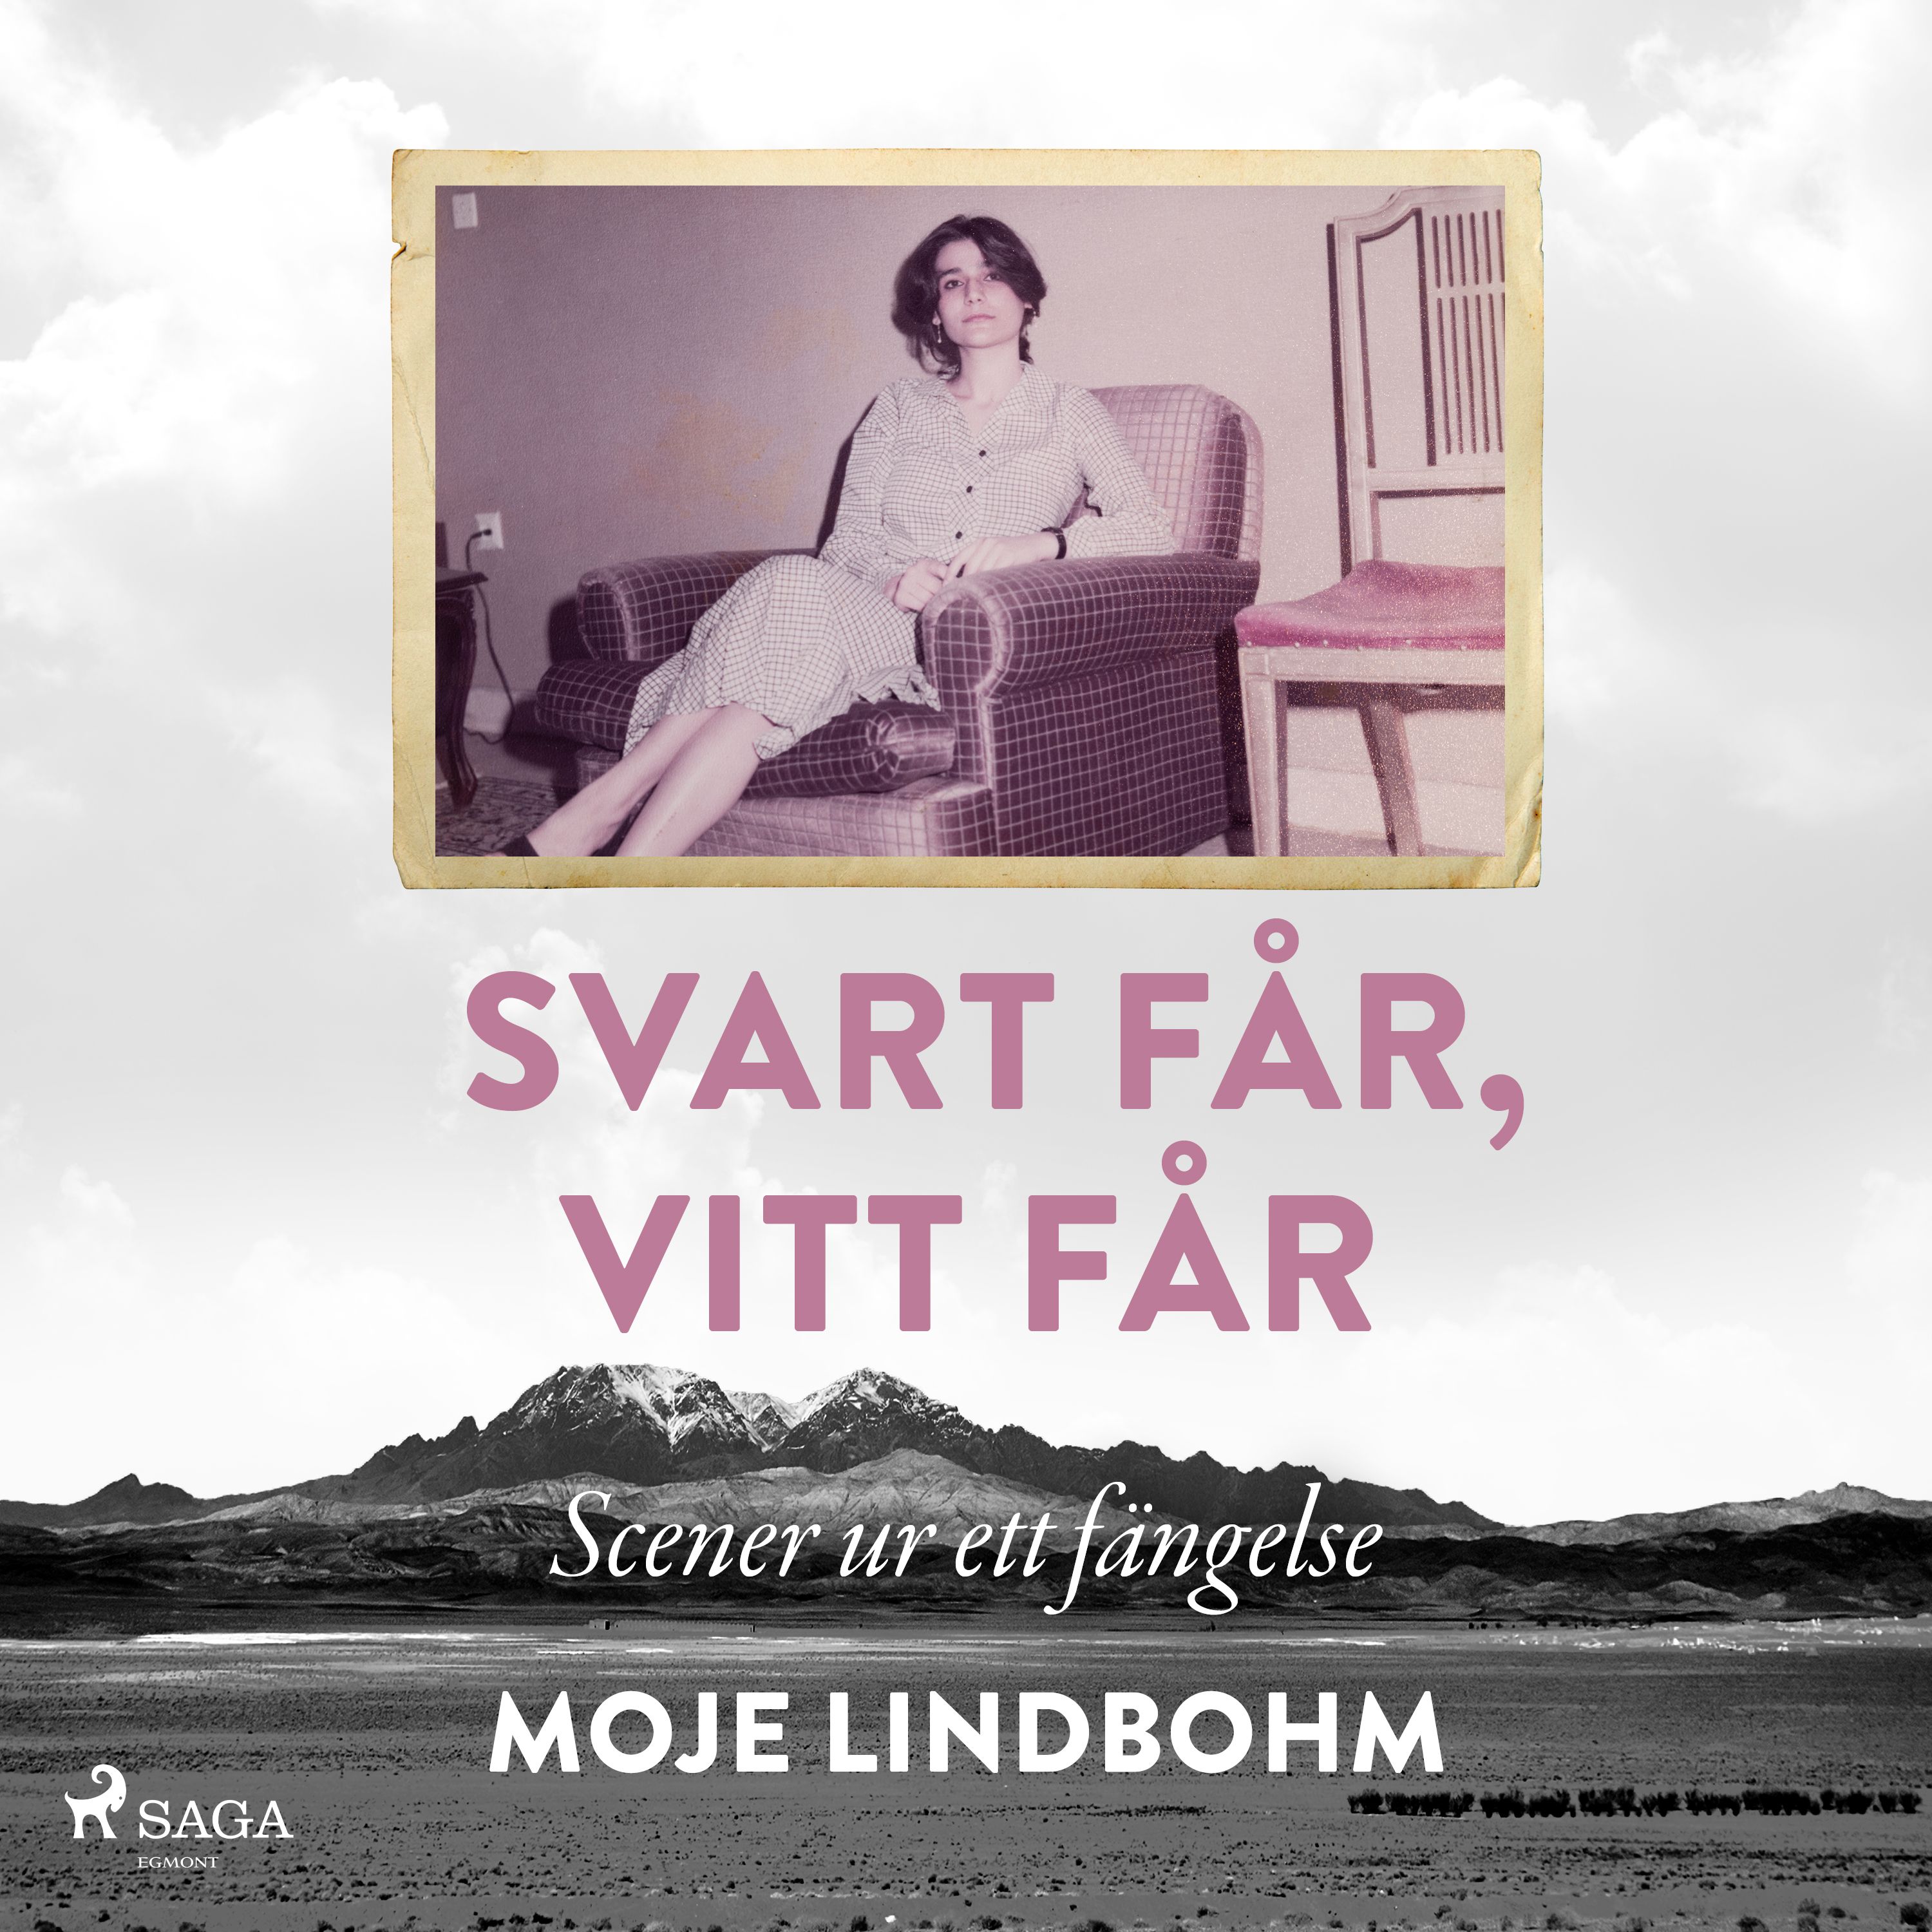 Svart får, vitt får : Scener ur ett fängelse, audiobook by Moje Lindbohm